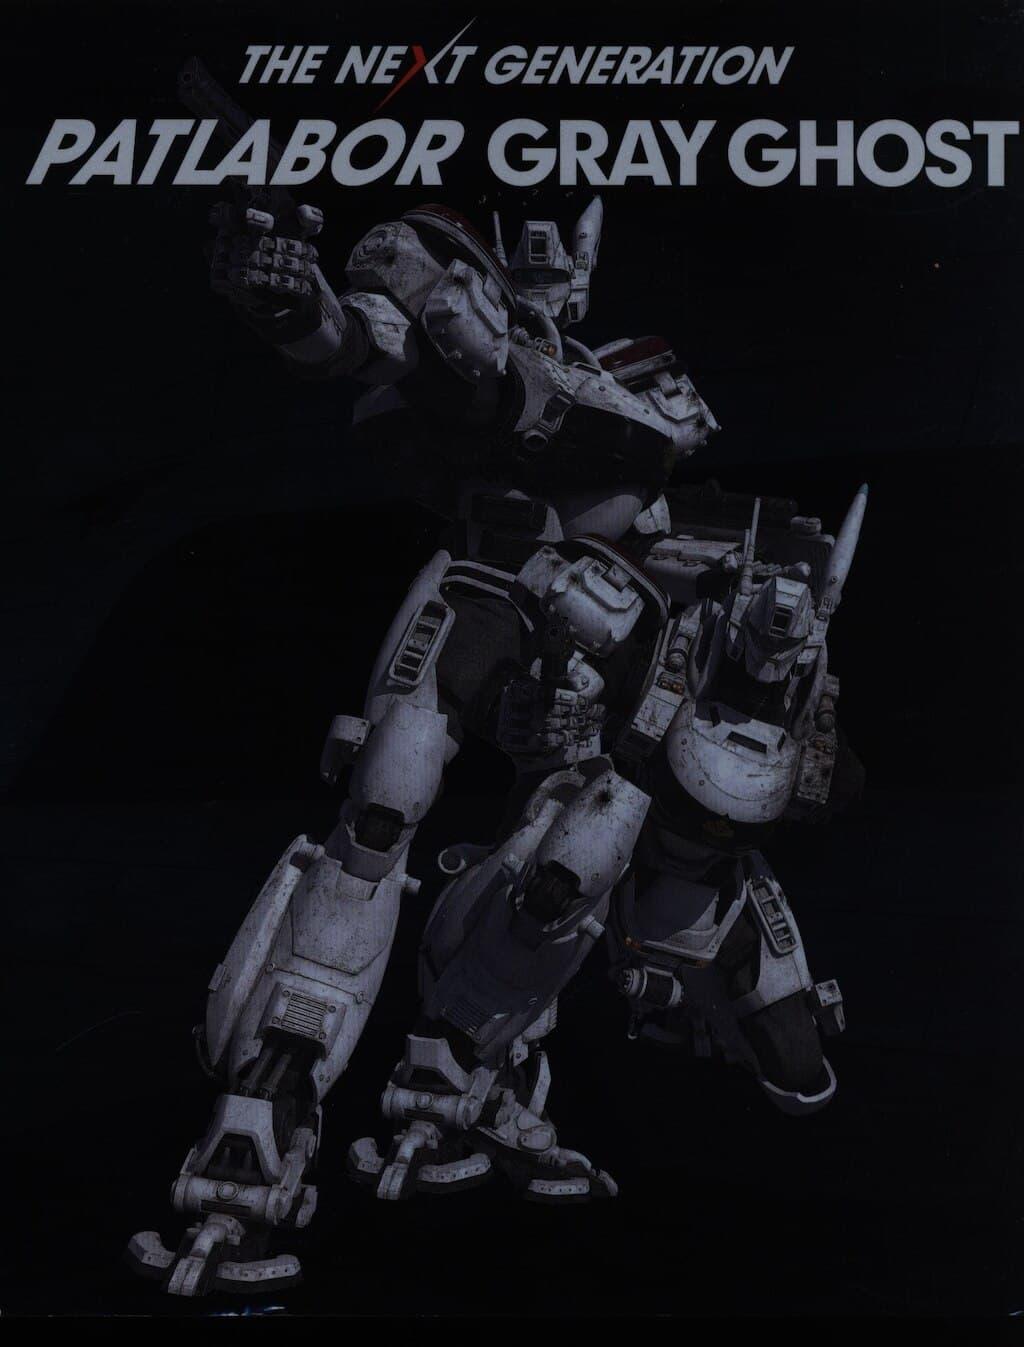 The Next Generation Patlabor: Tokyo War poster